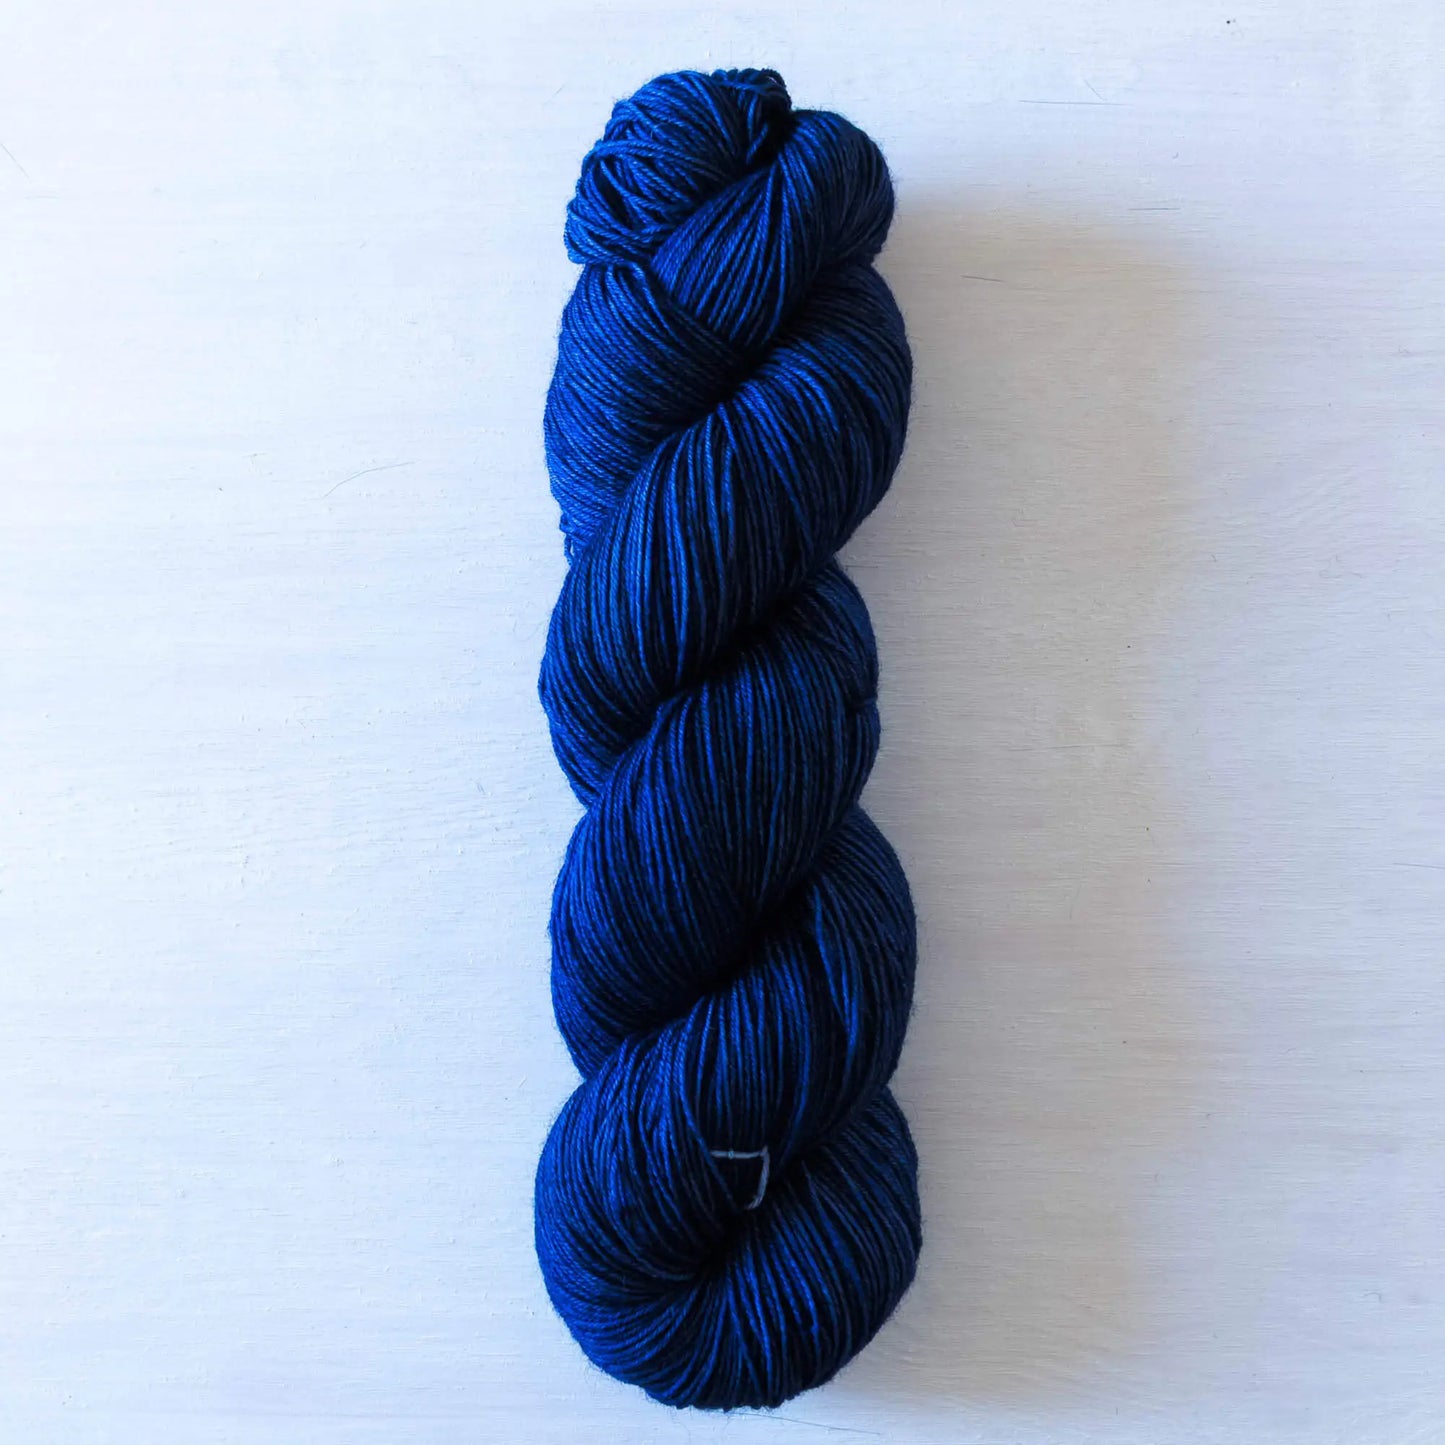 Dark Night - Blue Socks (BFL/Nylon)